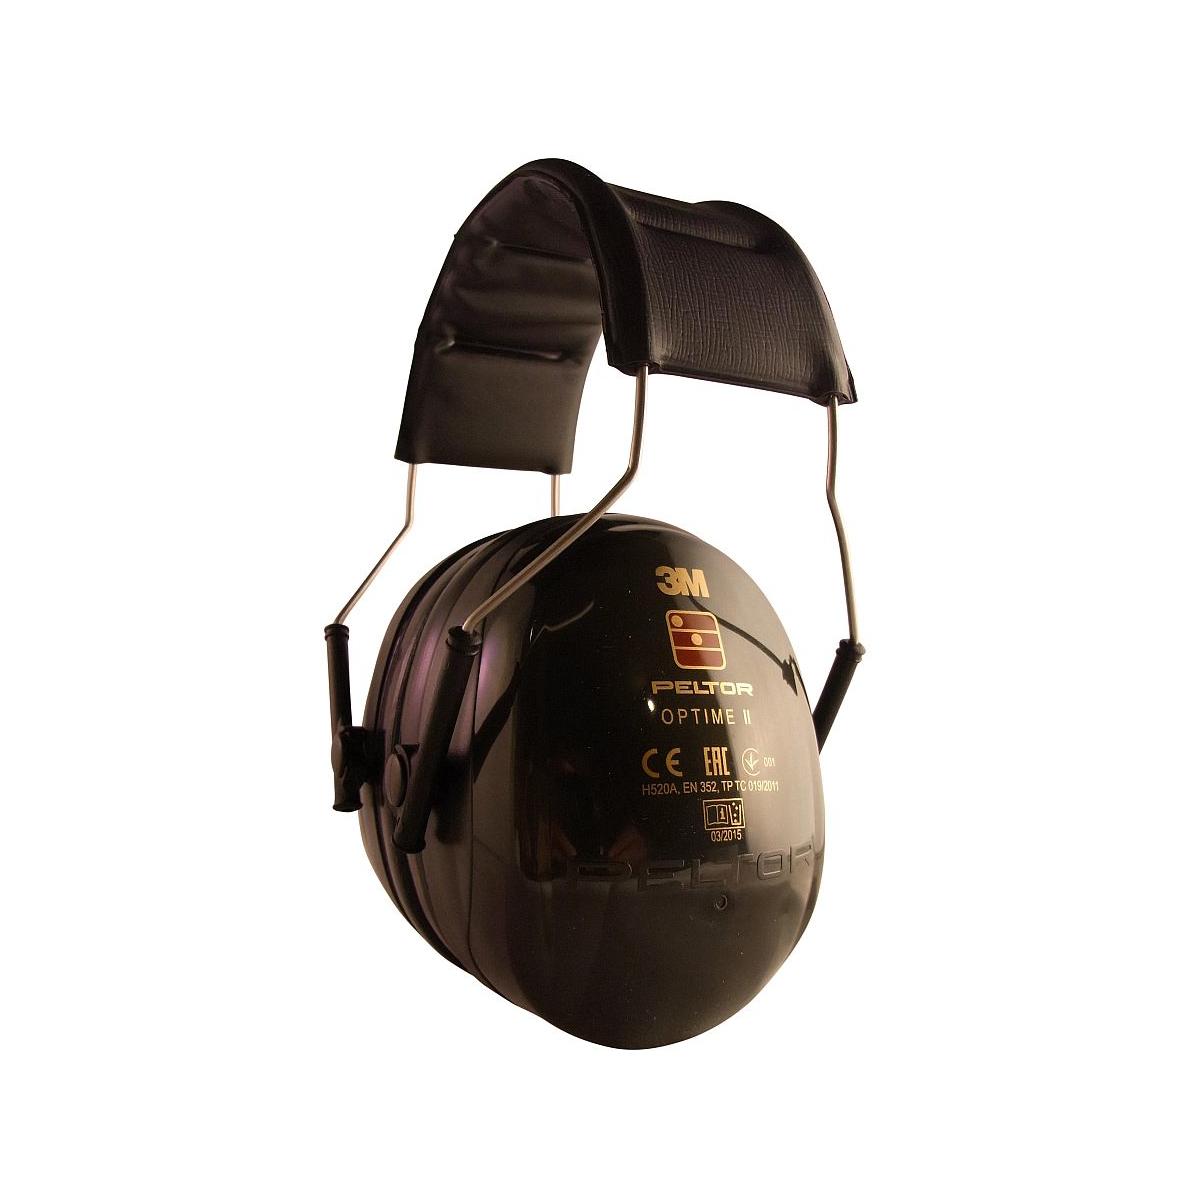 h520p3b-410-gq Solde 3 M Peltor Optime II capsule protection auditive 